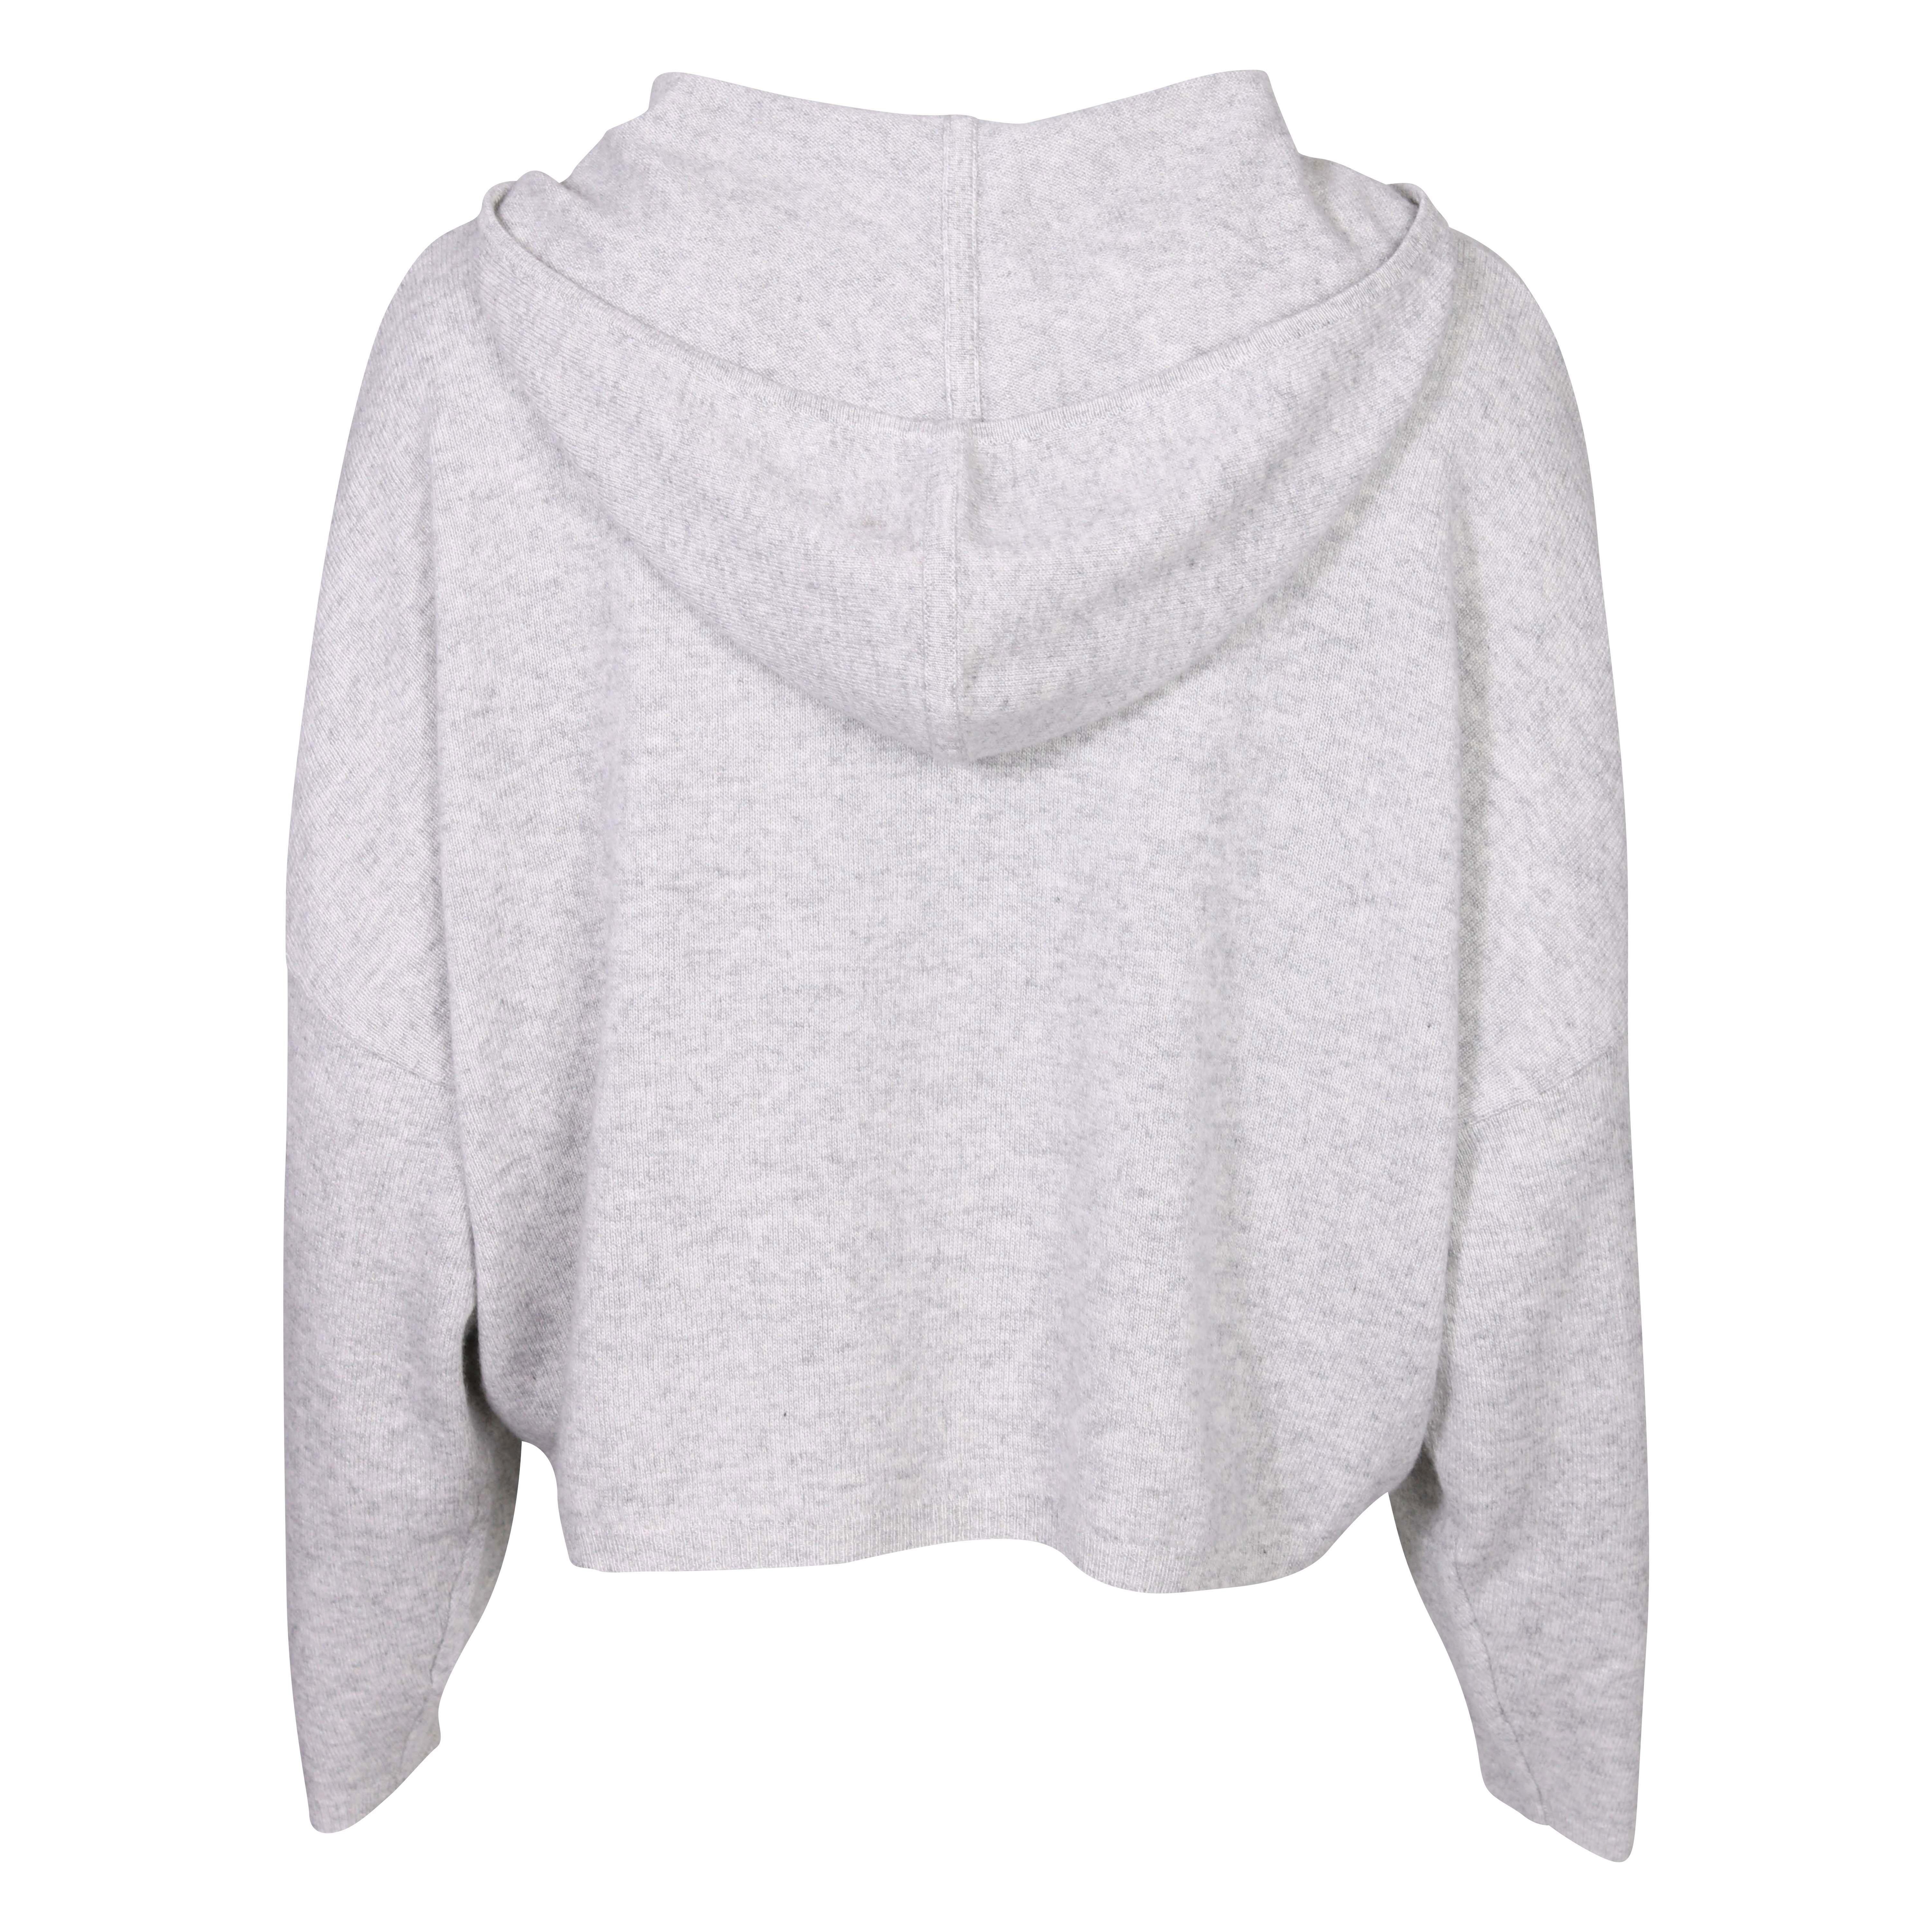 Absolut Cashmere Half Zip Hodded Sweater in Light Grey Melange S